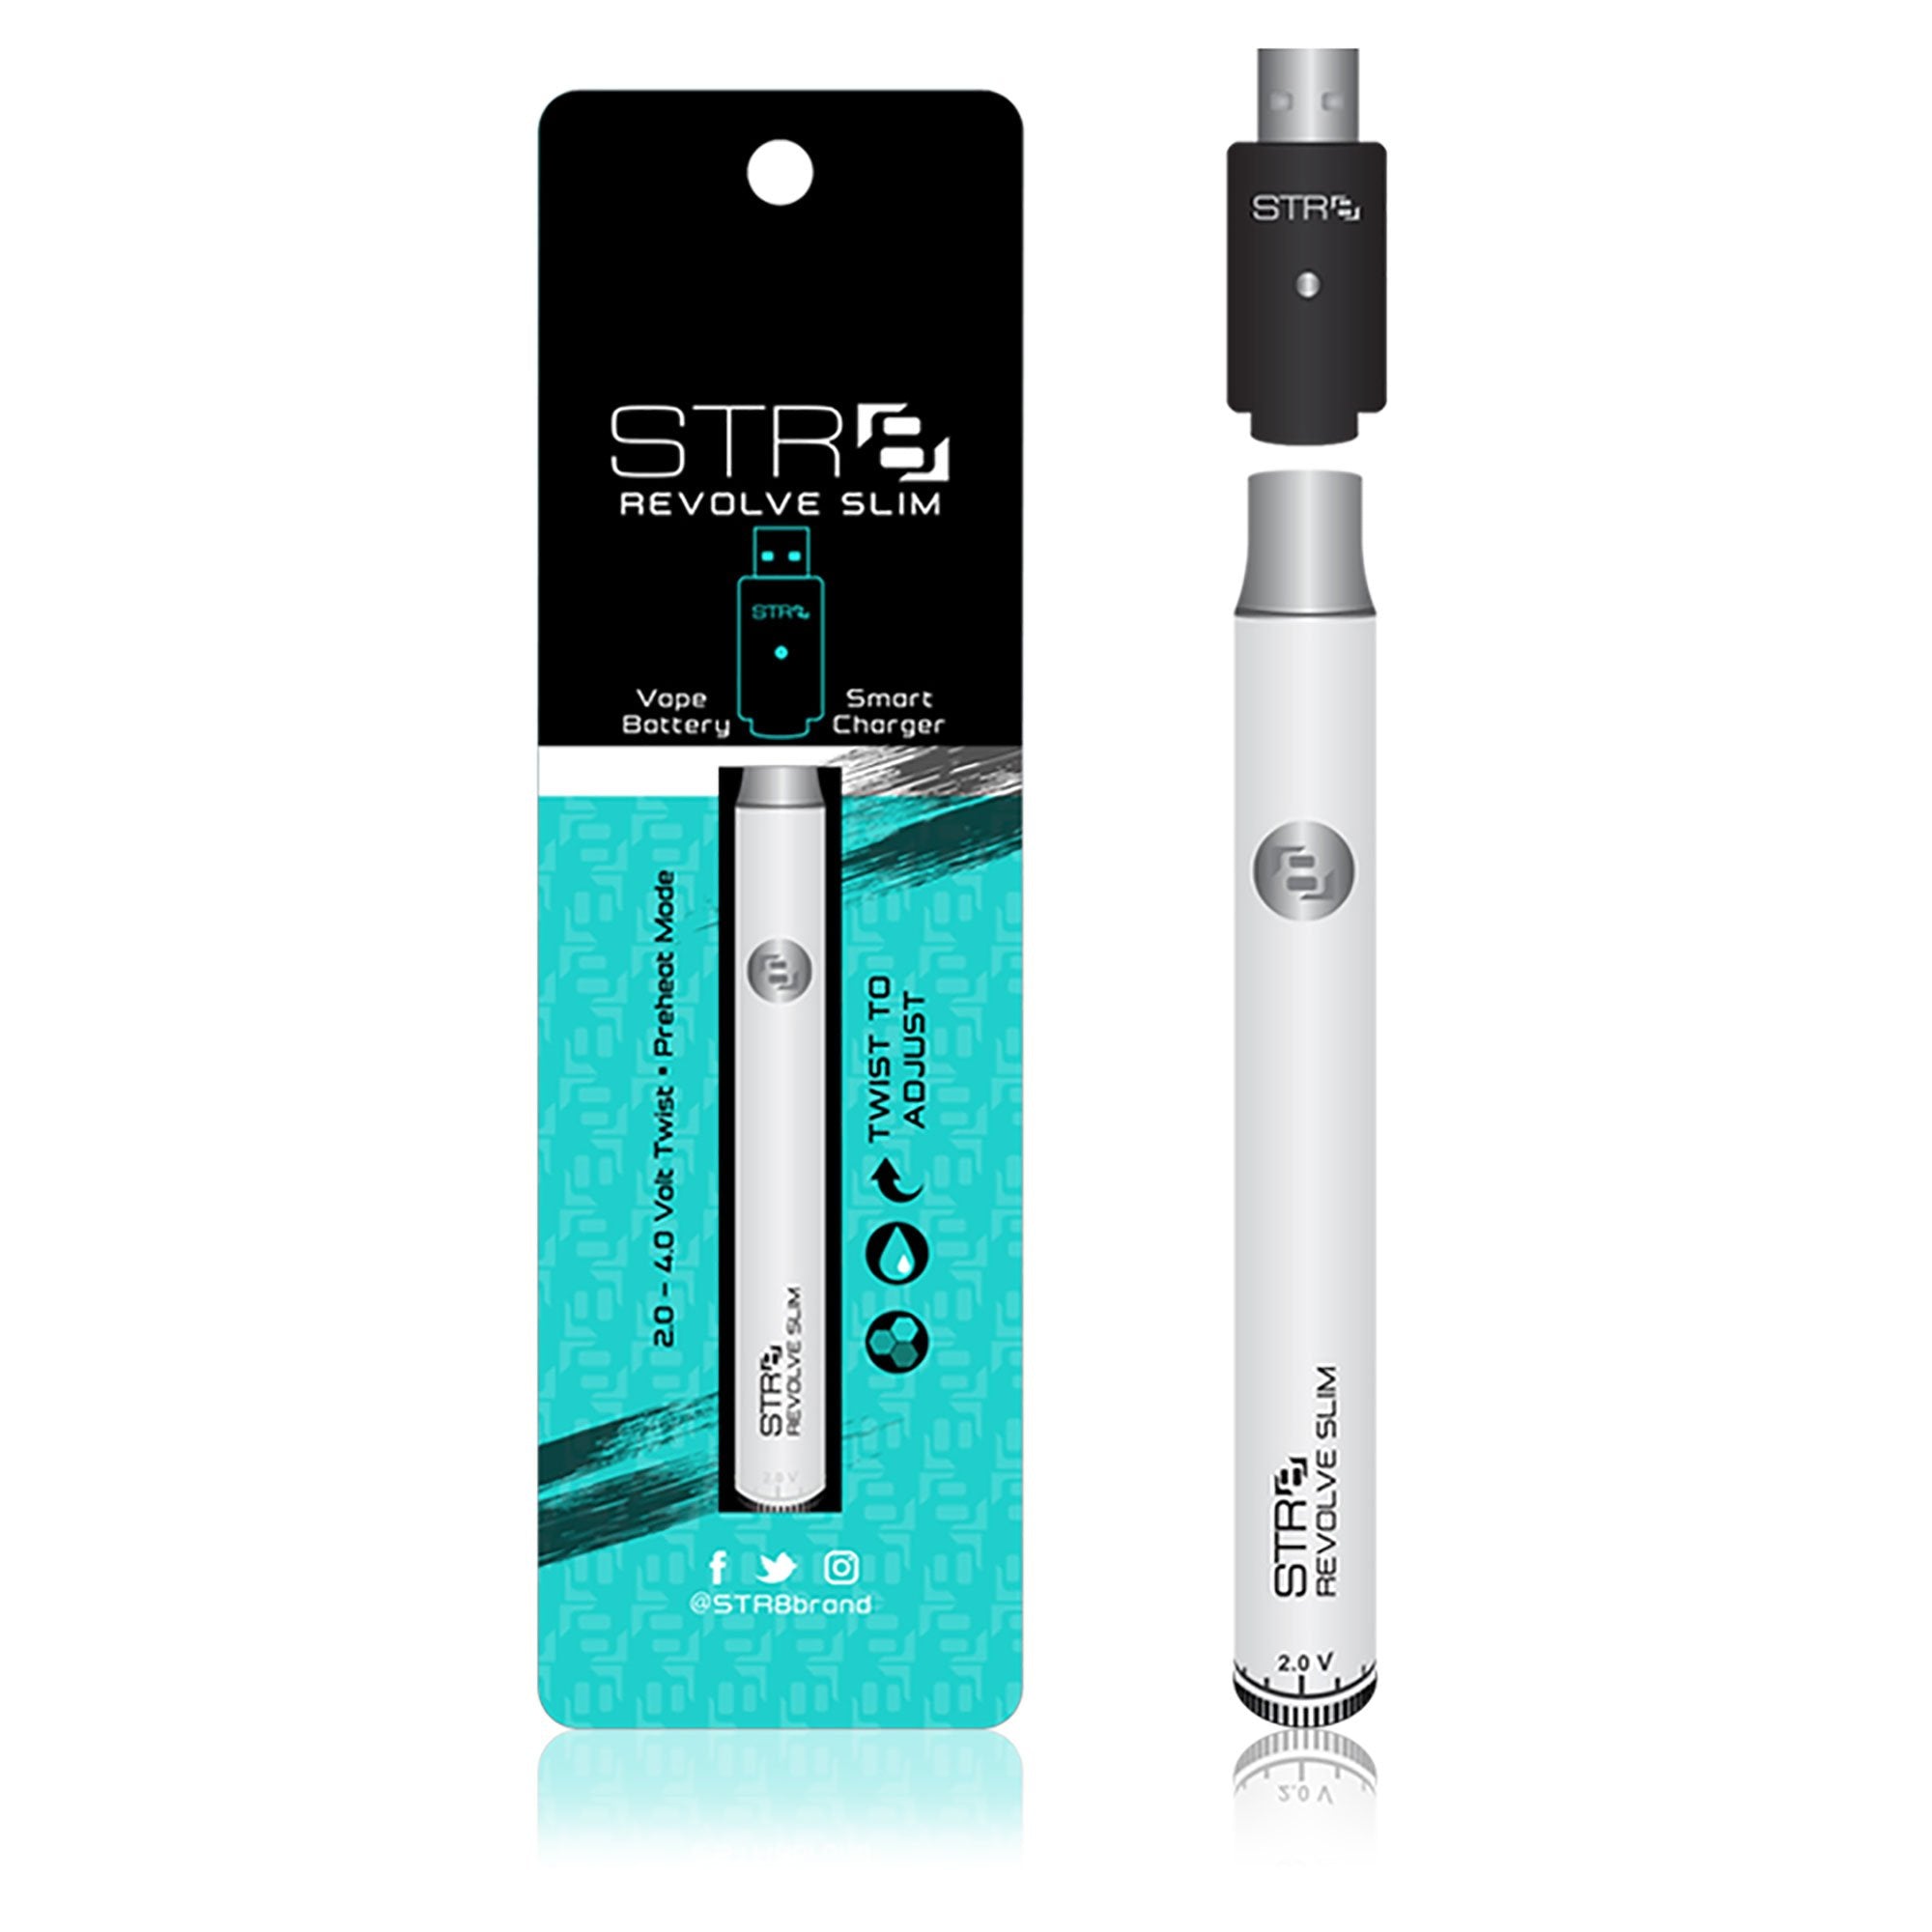 STR8 | Revolve Slim Vape Batteries with Charger | 320mAh - White - 10 Count - 2